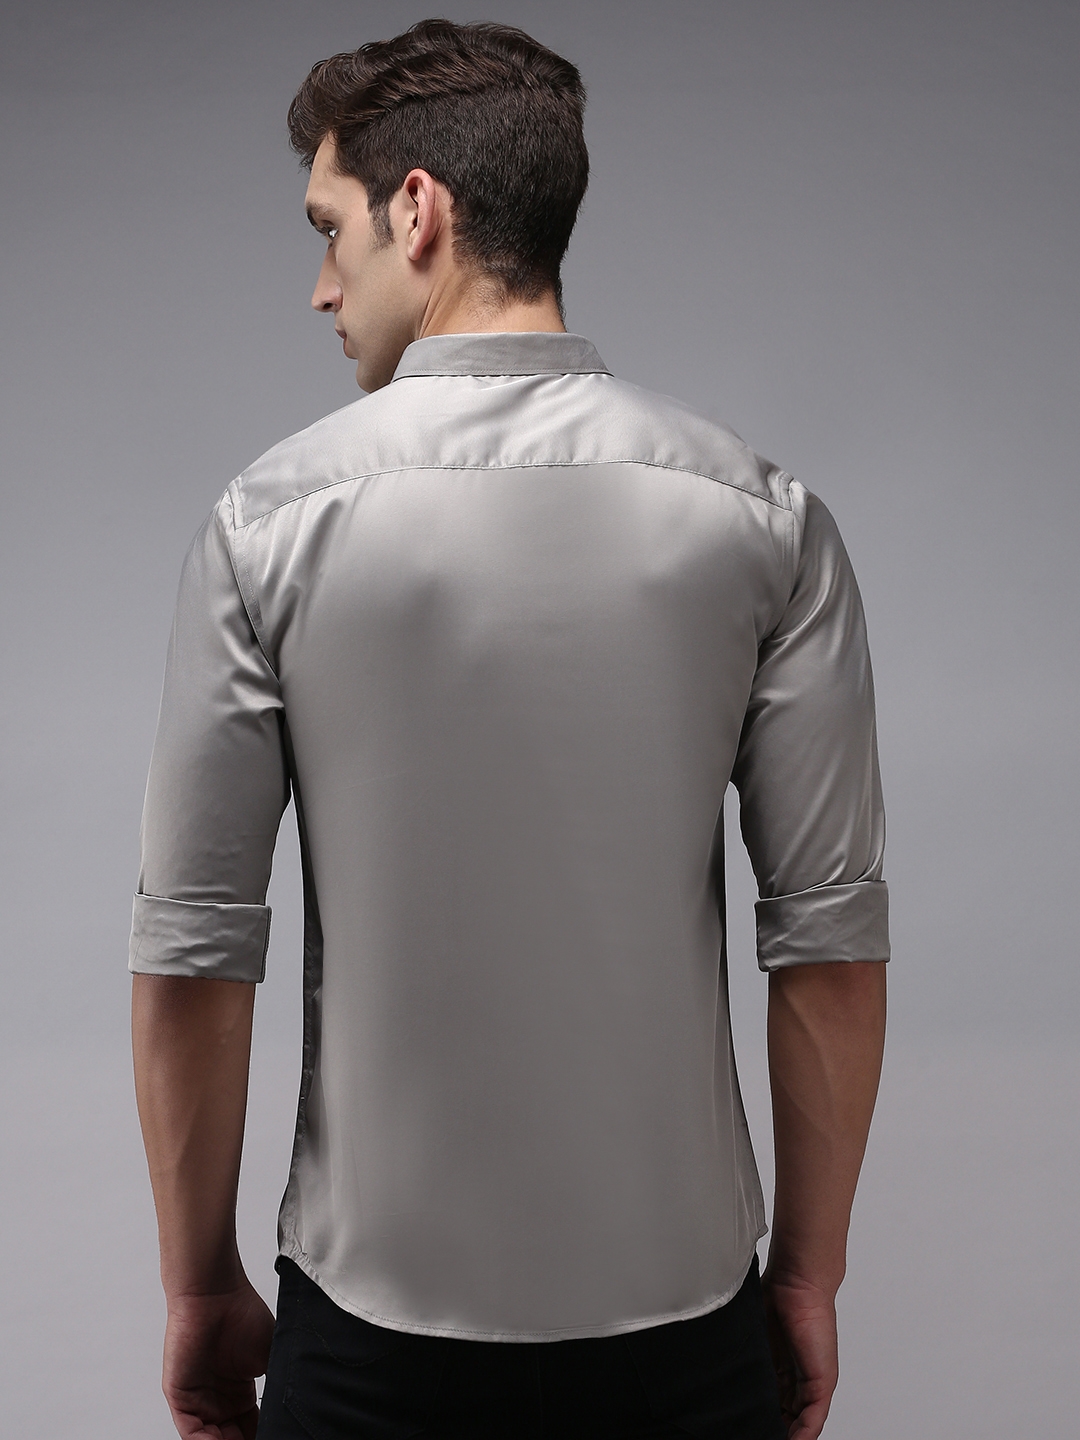 SHOWOFF Men's Grey Spread Collar Solid Comfort Fit Shirt